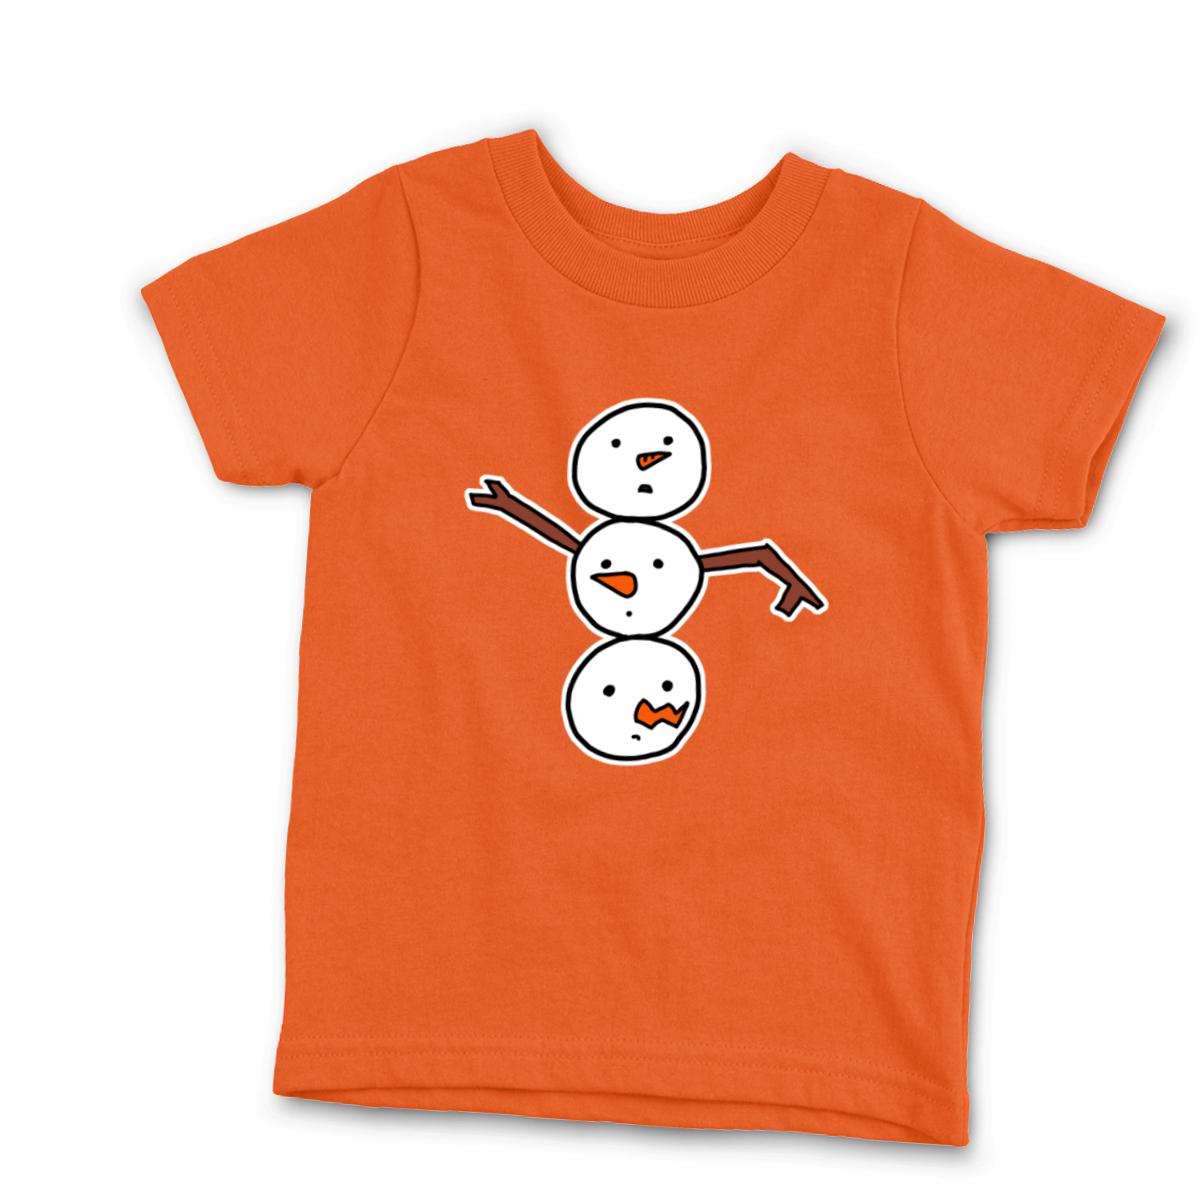 Snowman All Heads Kid's Tee Small orange